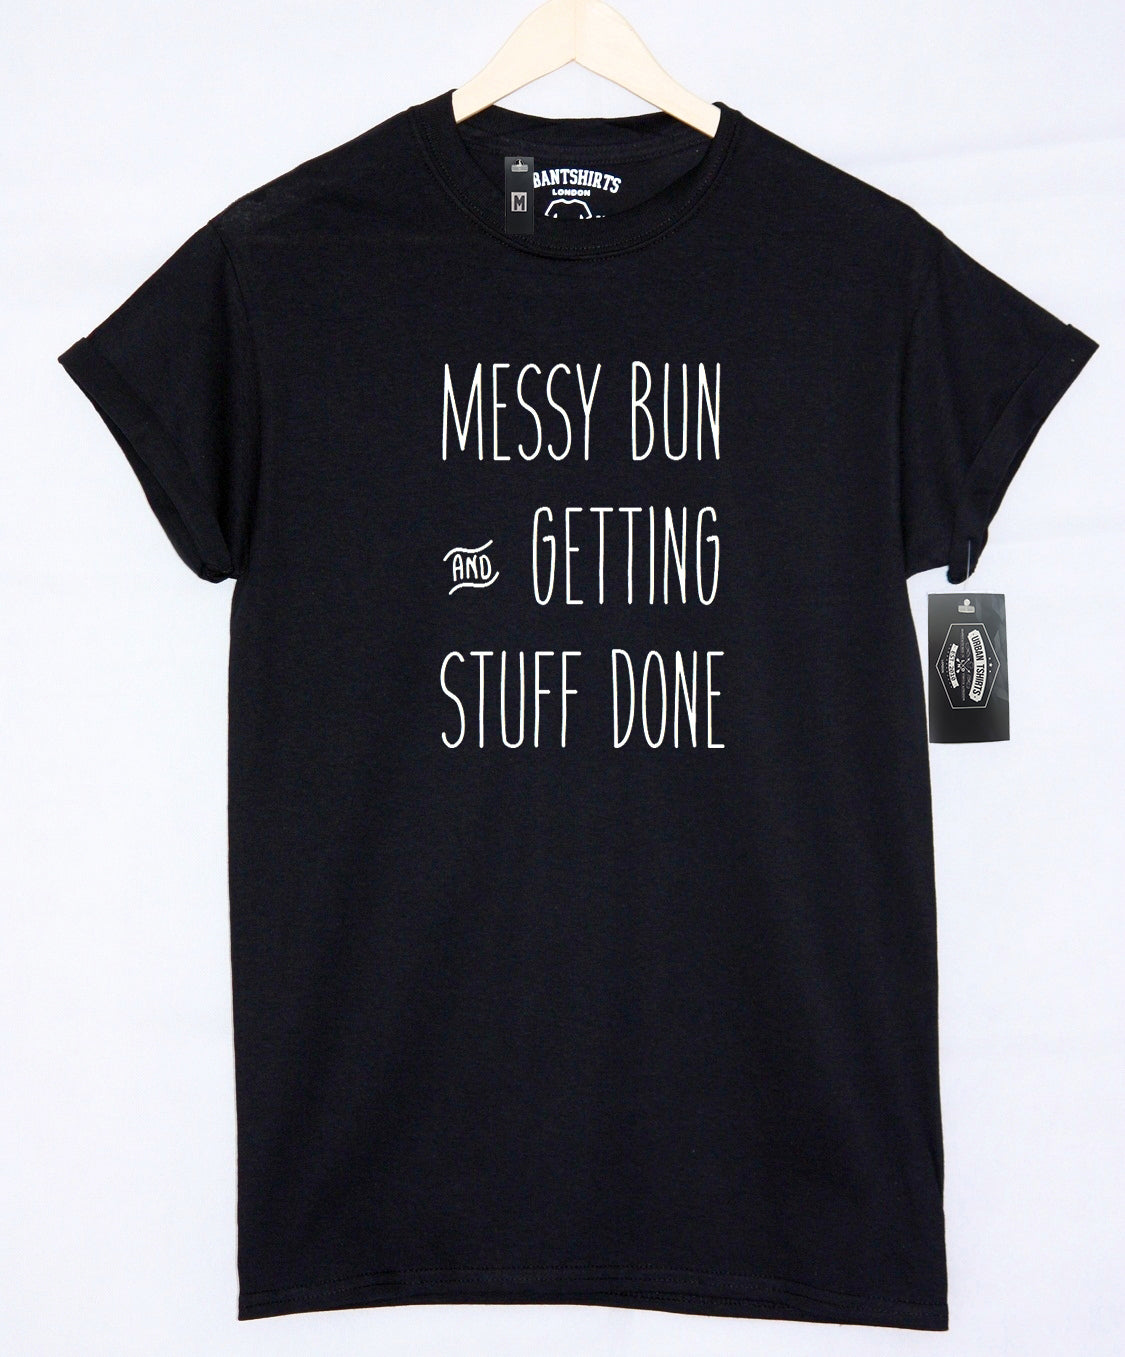 Messy bun and getting stuff done T-shirt - Urbantshirts.co.uk